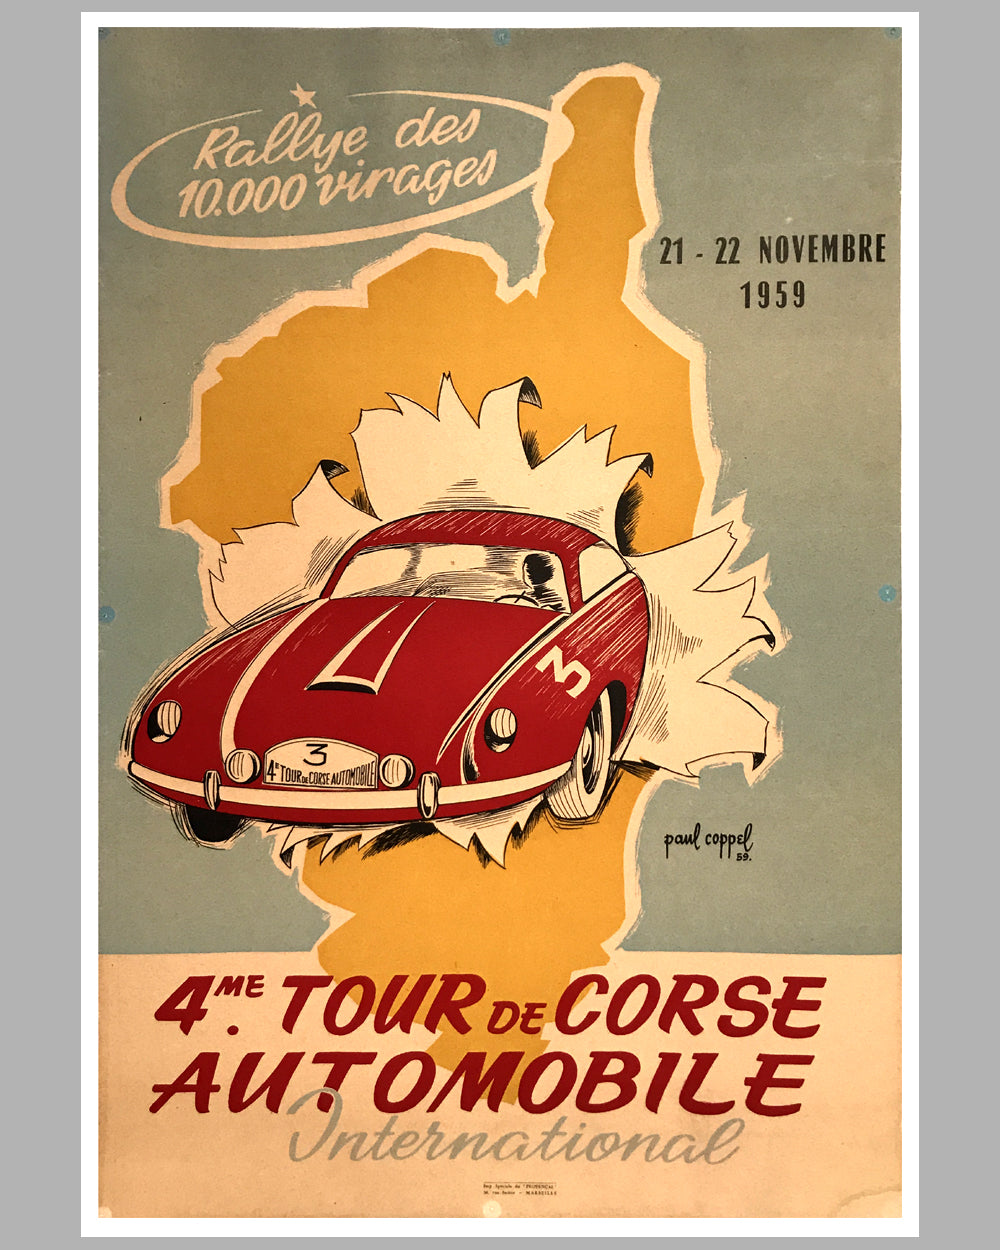 1959 - 4eme Tour de Corse Automobile International Rallye of the 10,000 turns 